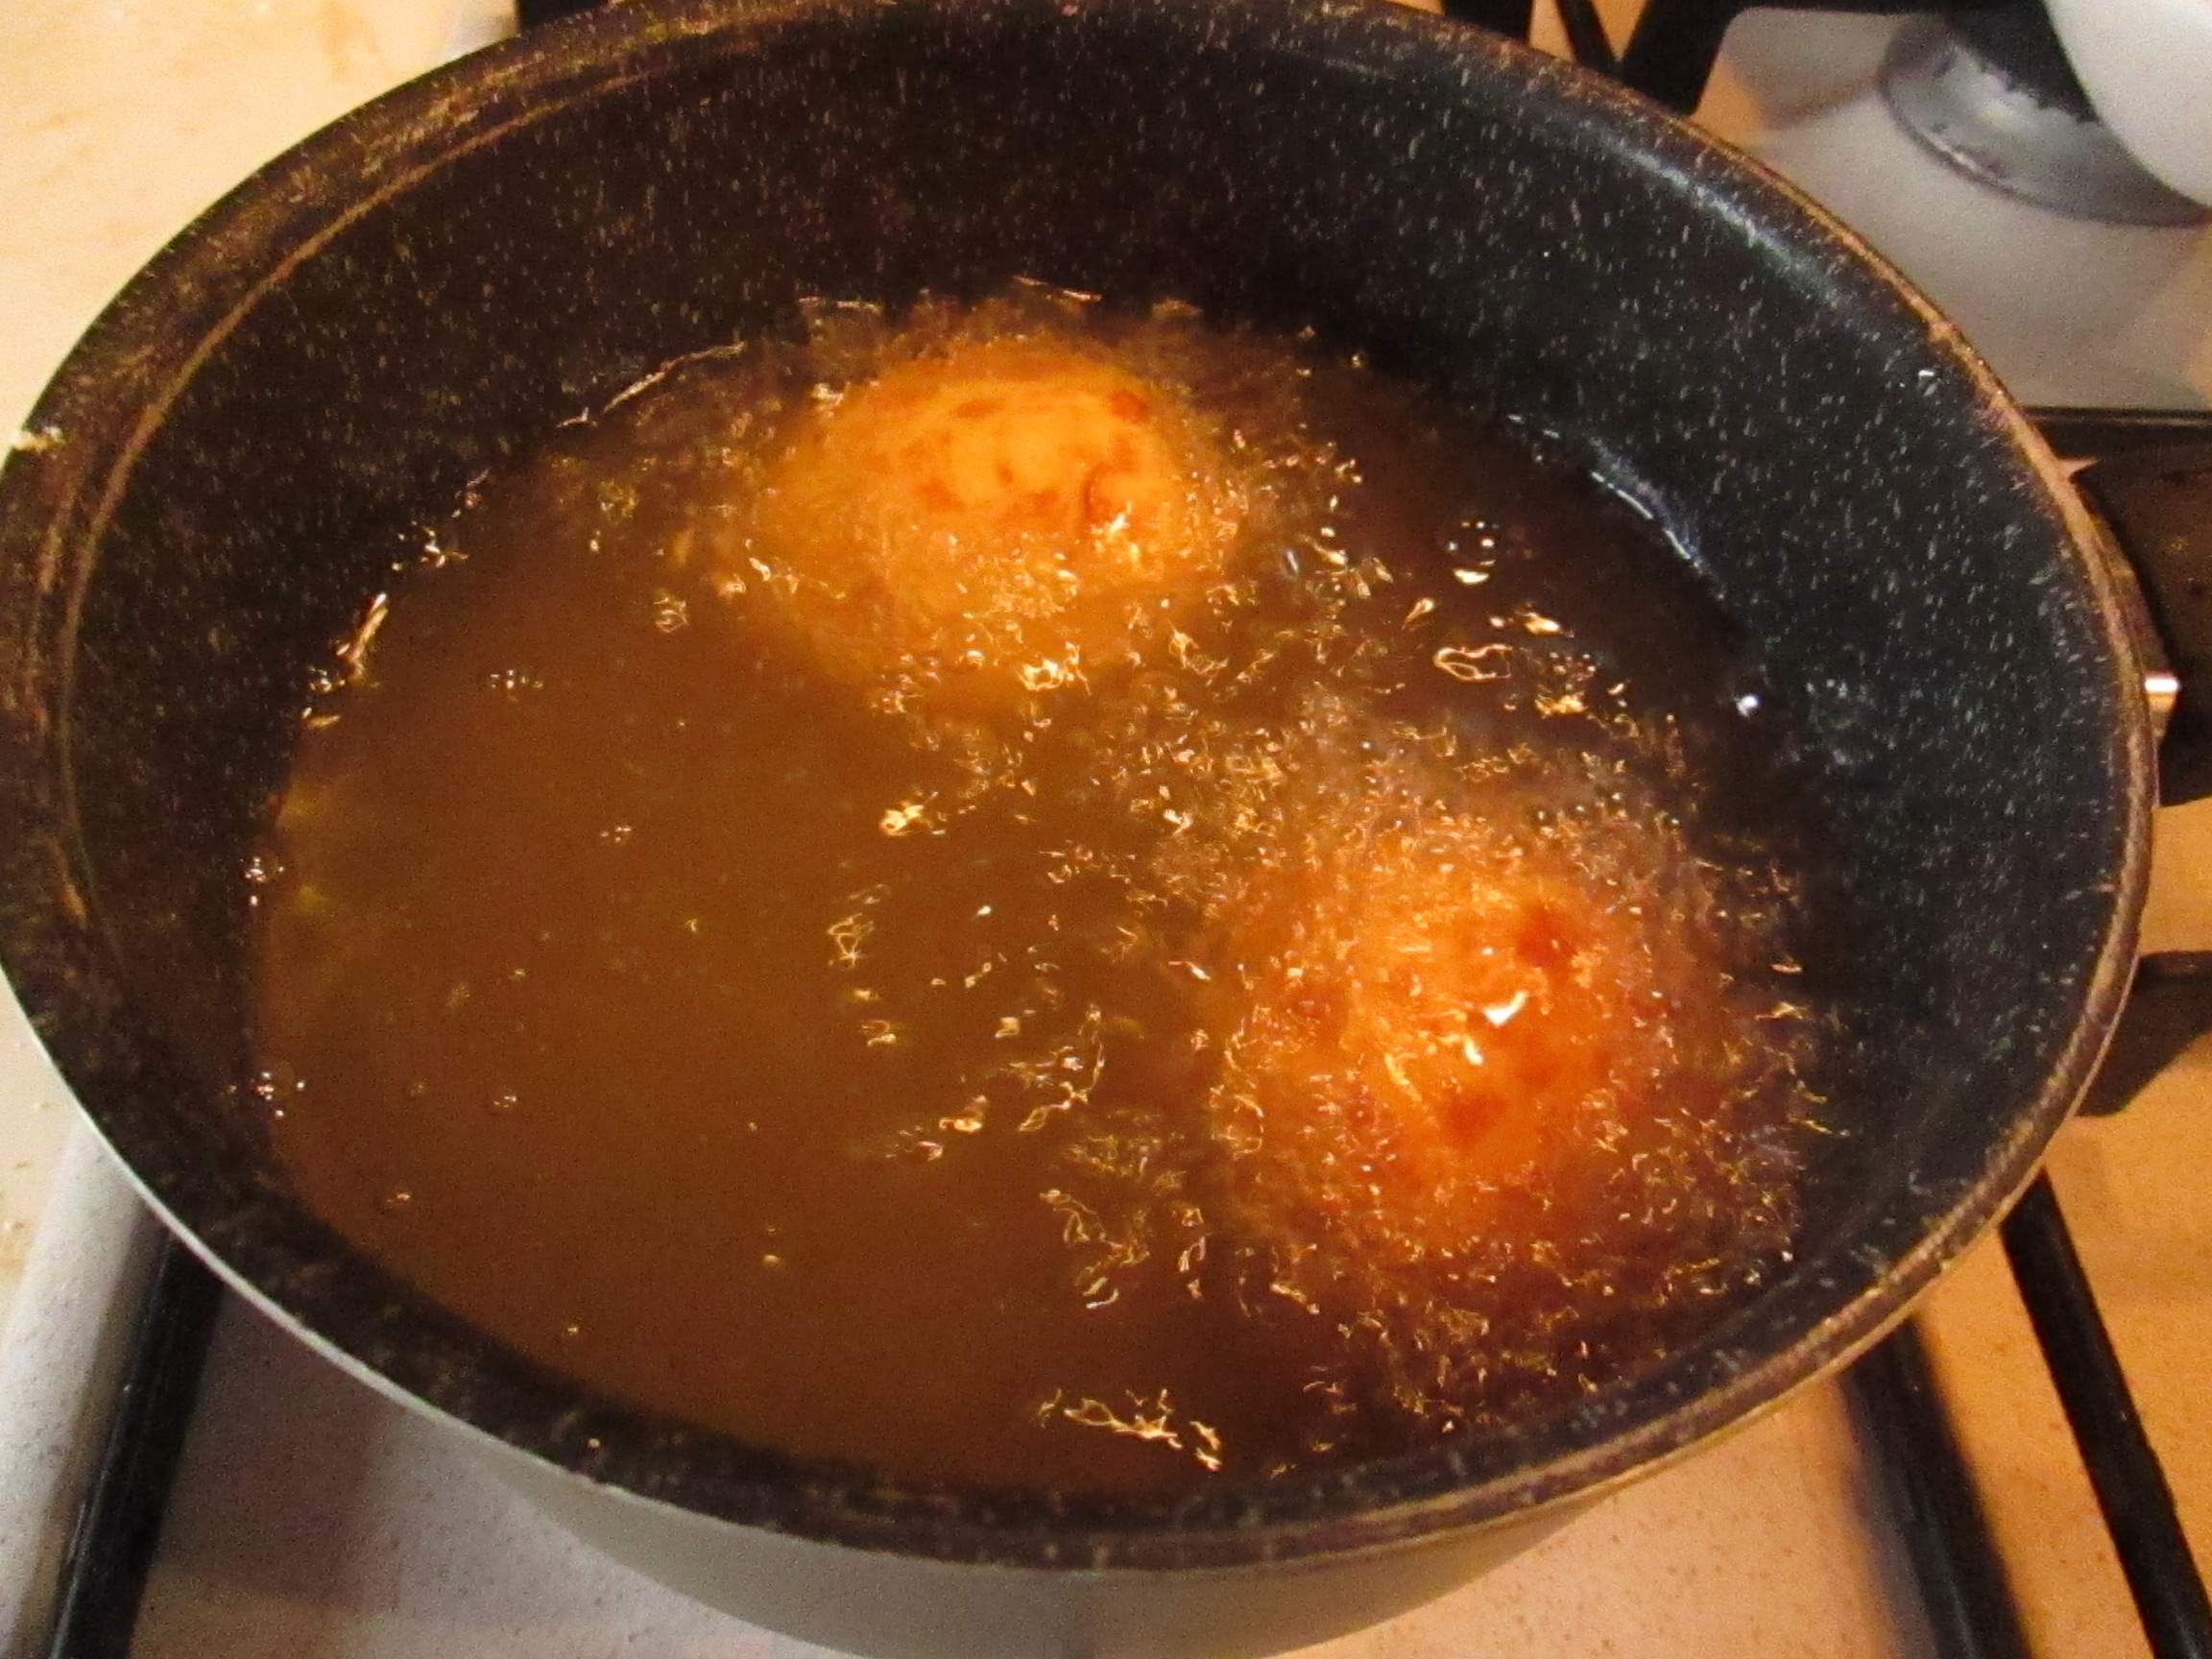 Krofnr od krompira - postupak prženja.